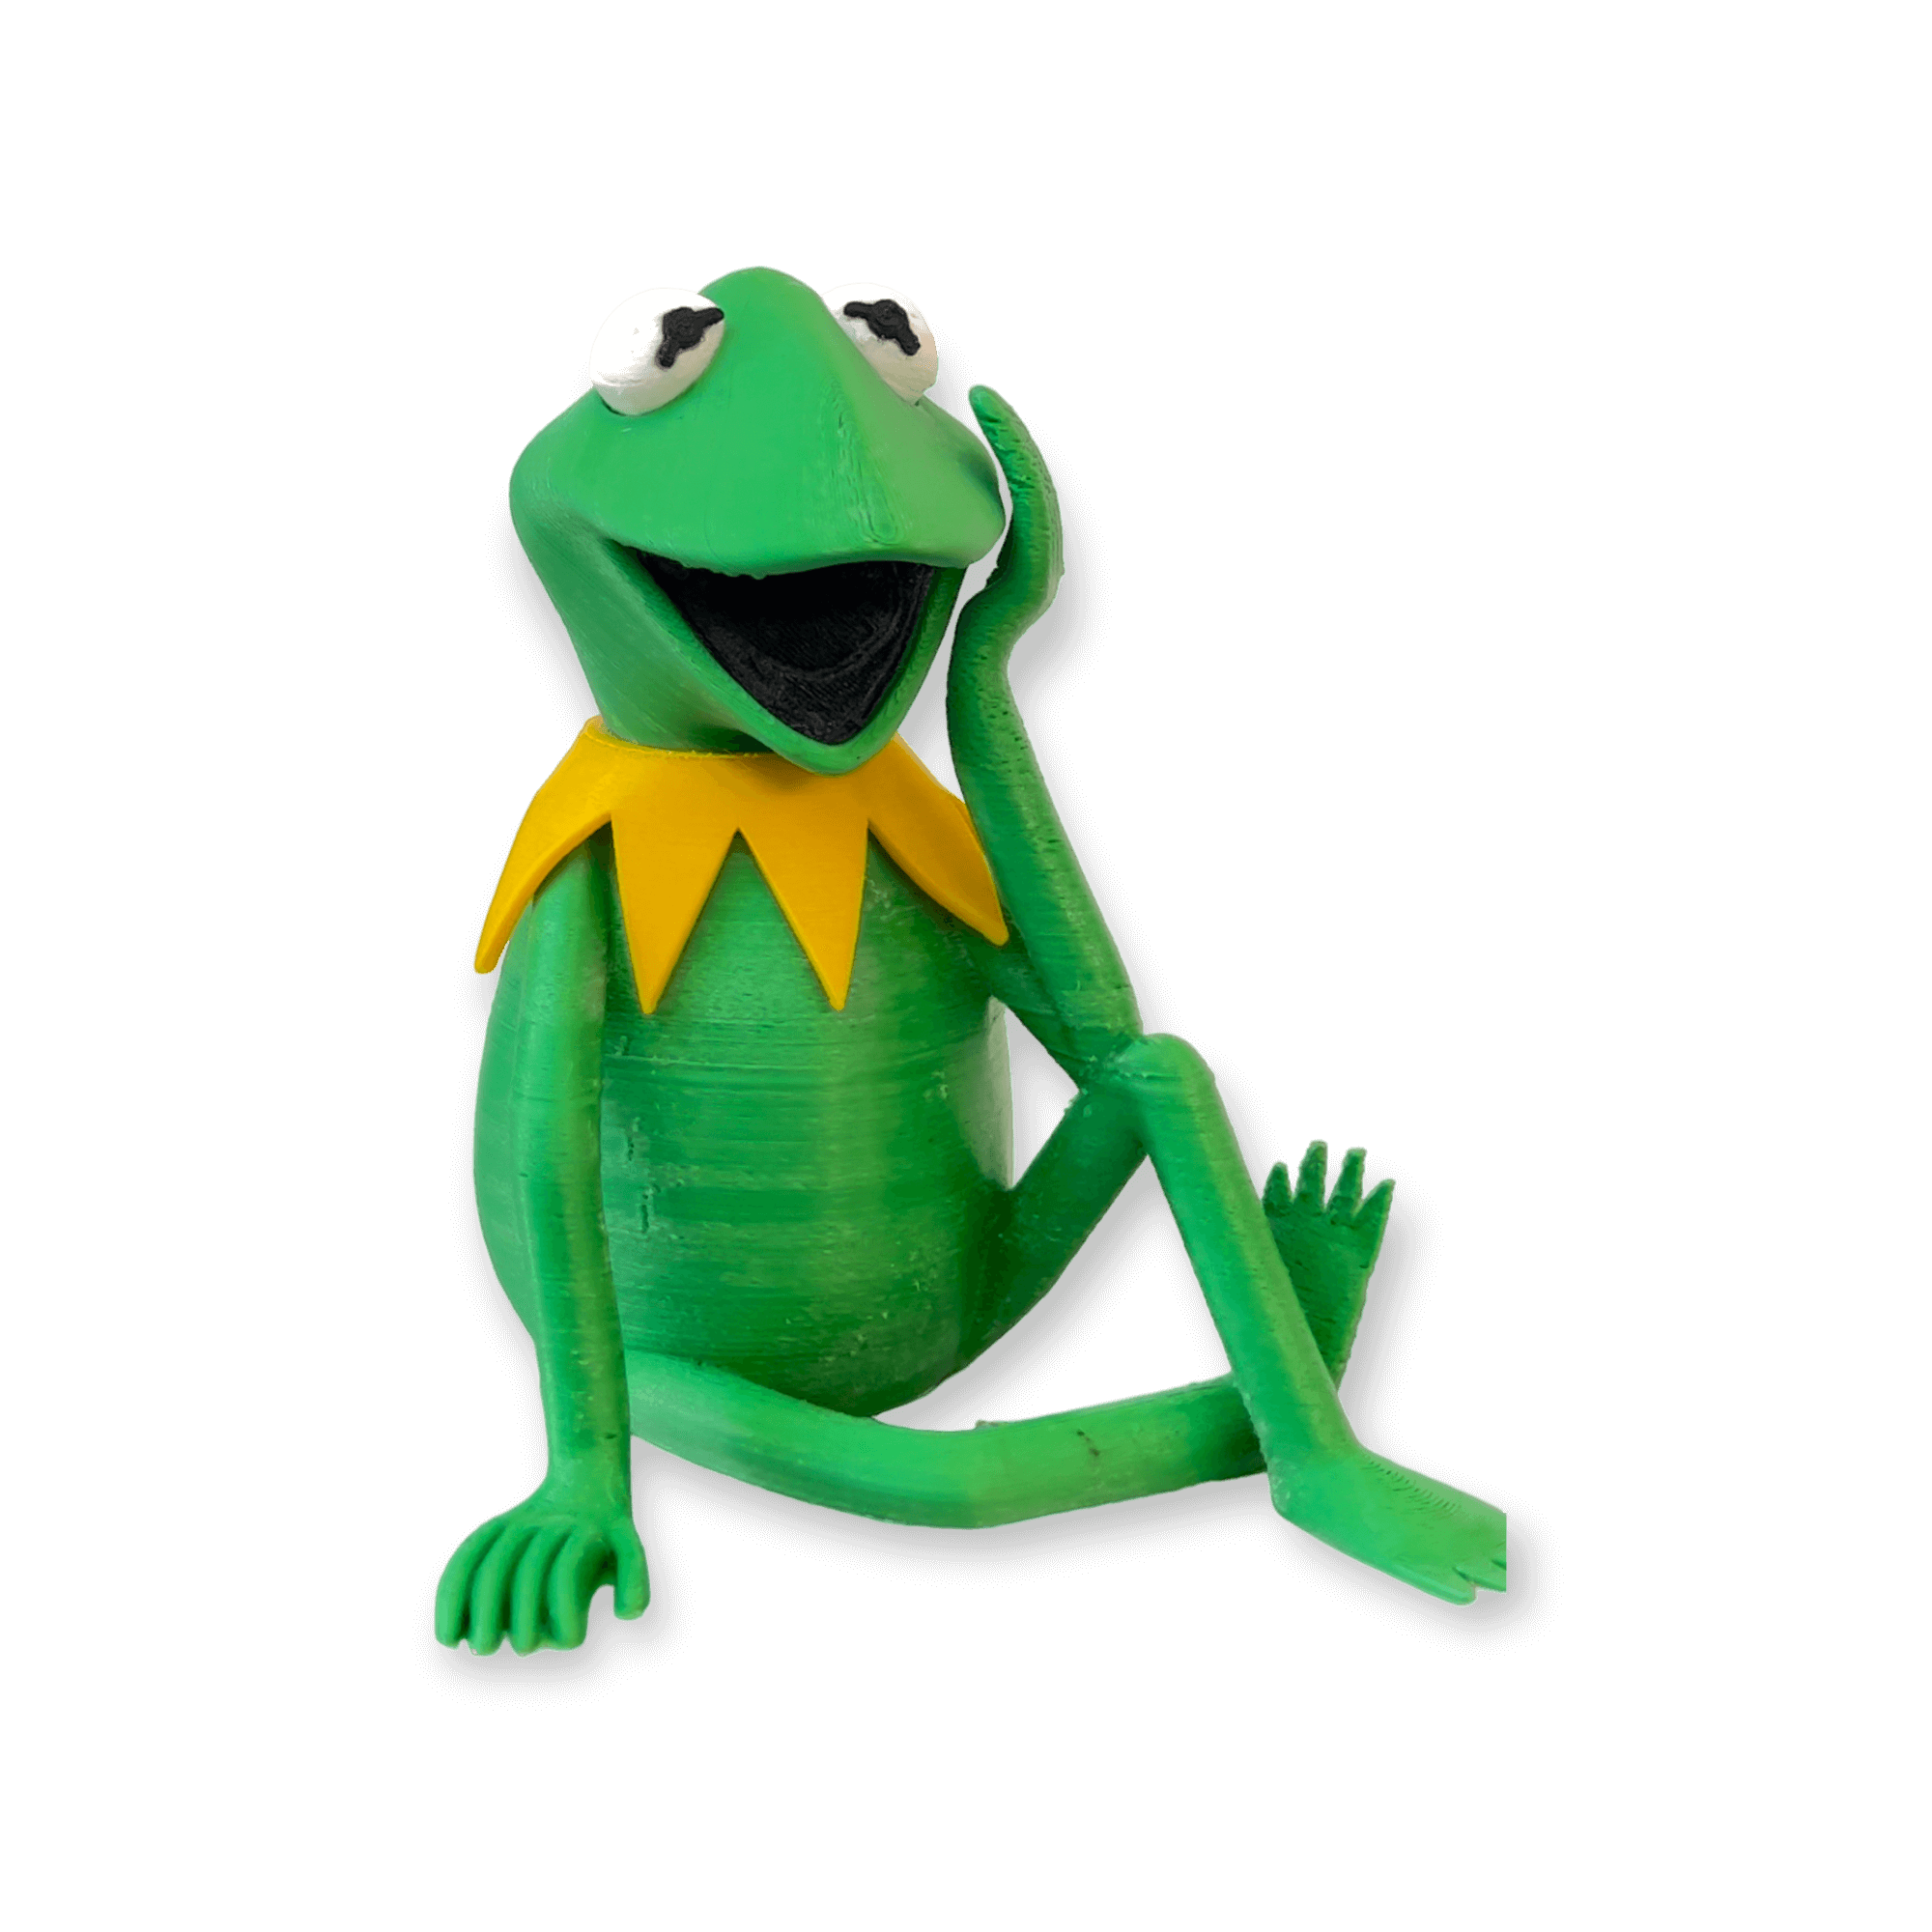 Kermit the frog 3d print1.PNG